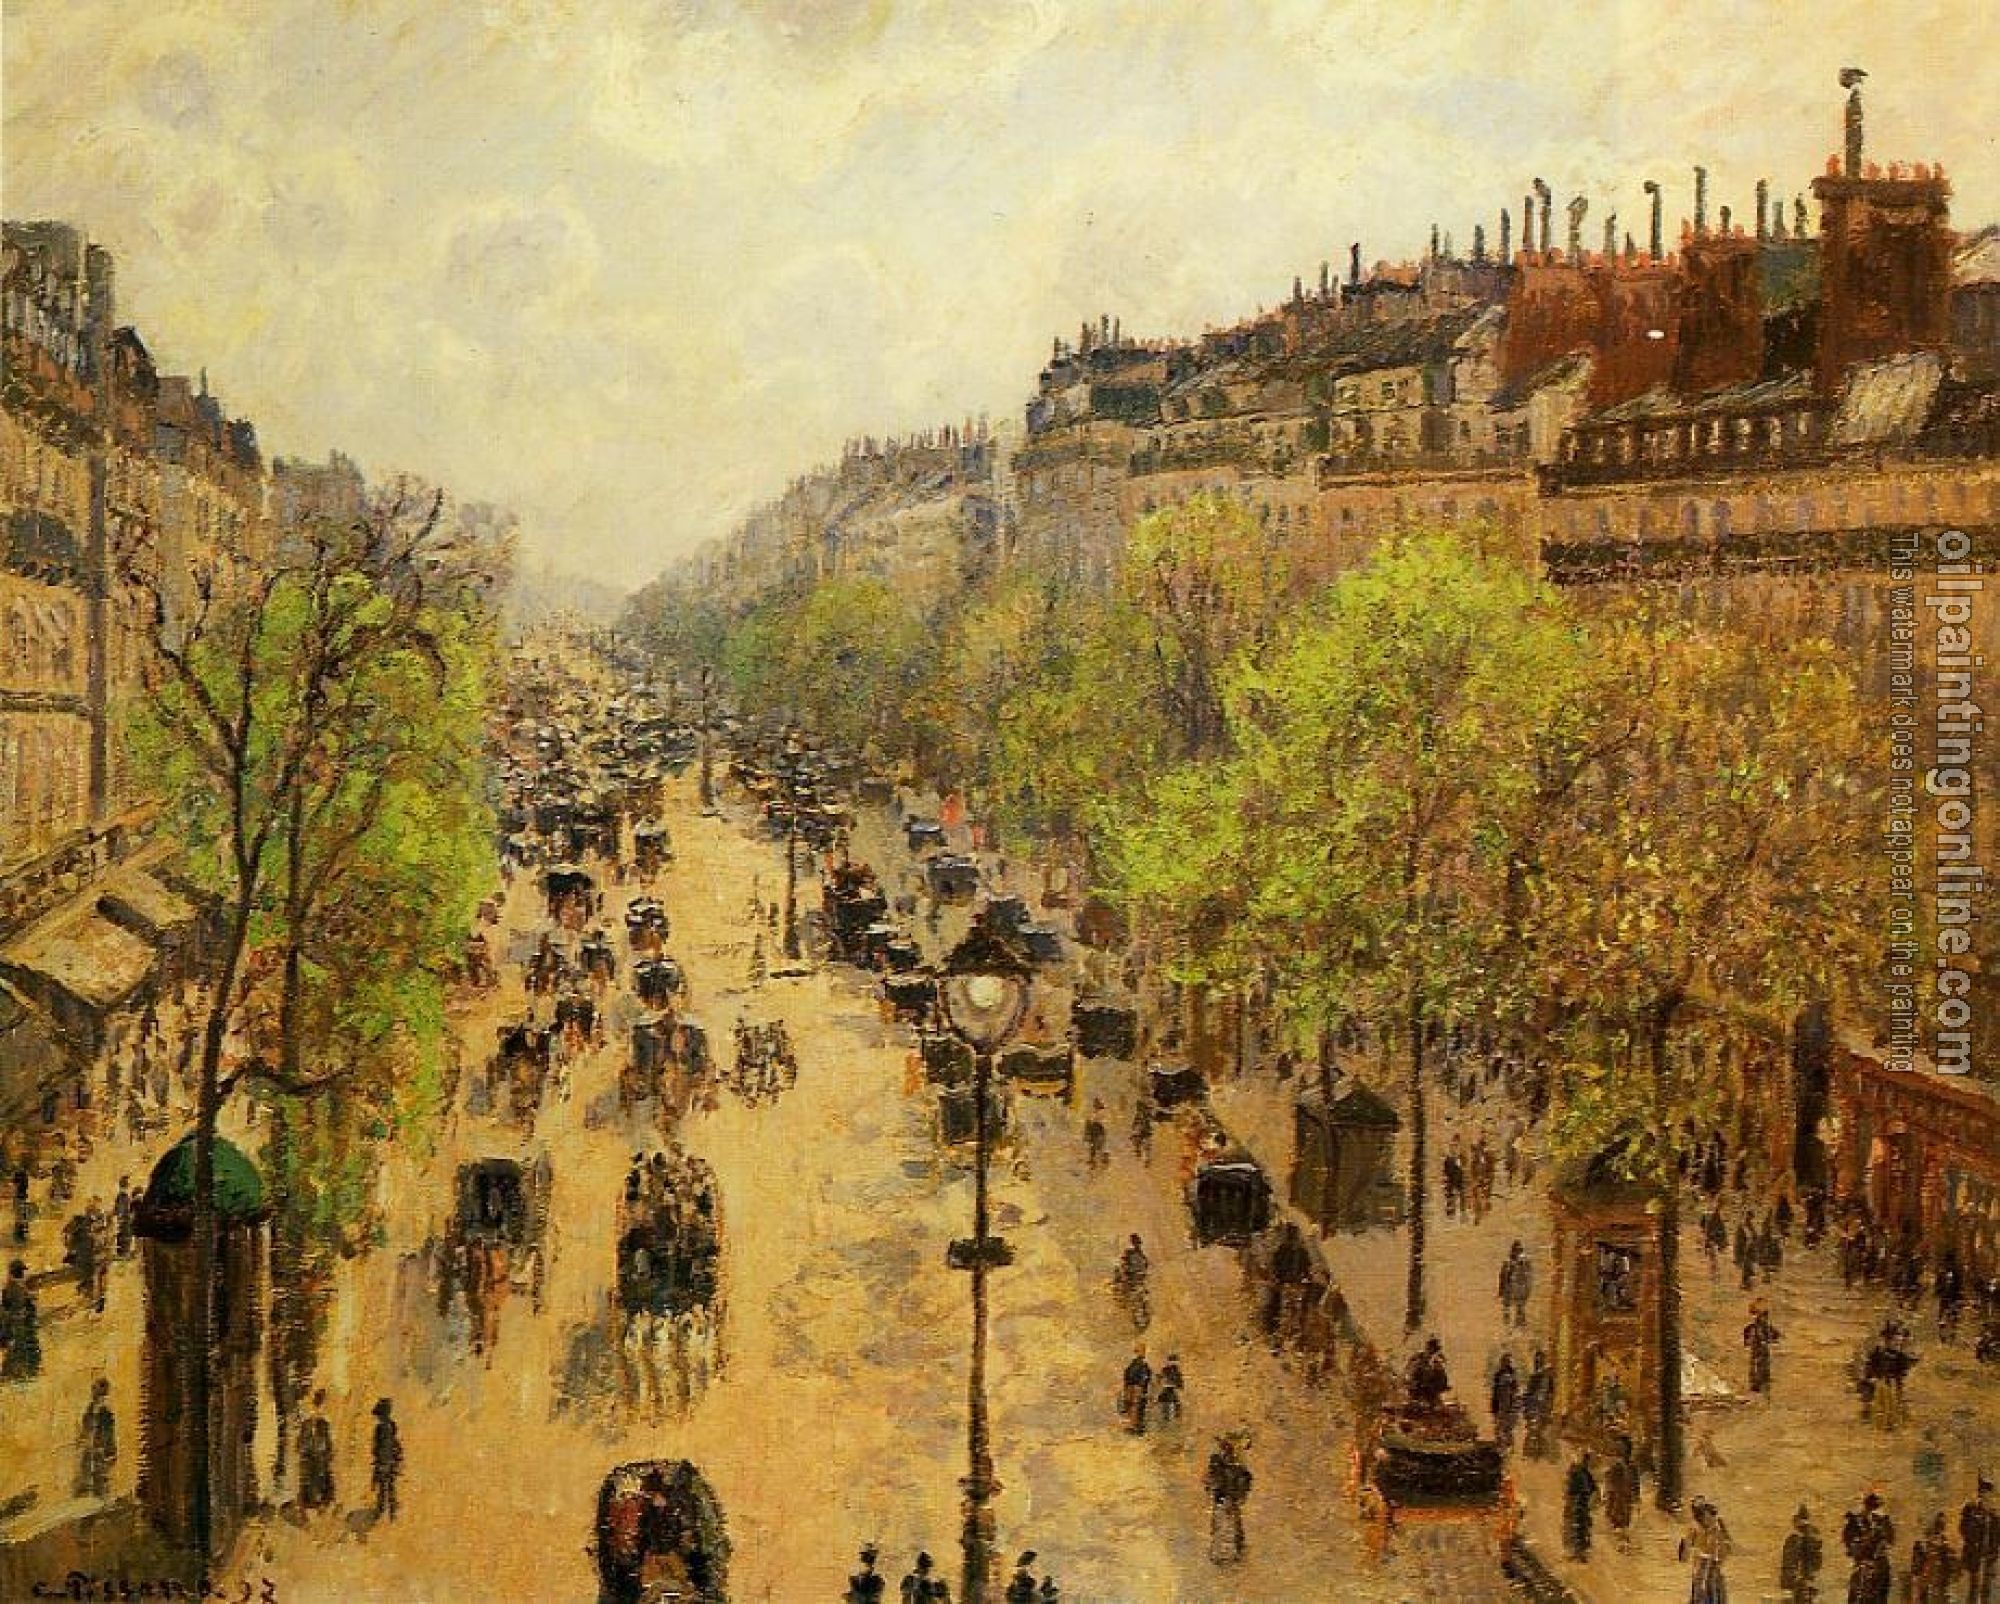 Pissarro, Camille - Boulevard Montmartre, Spring